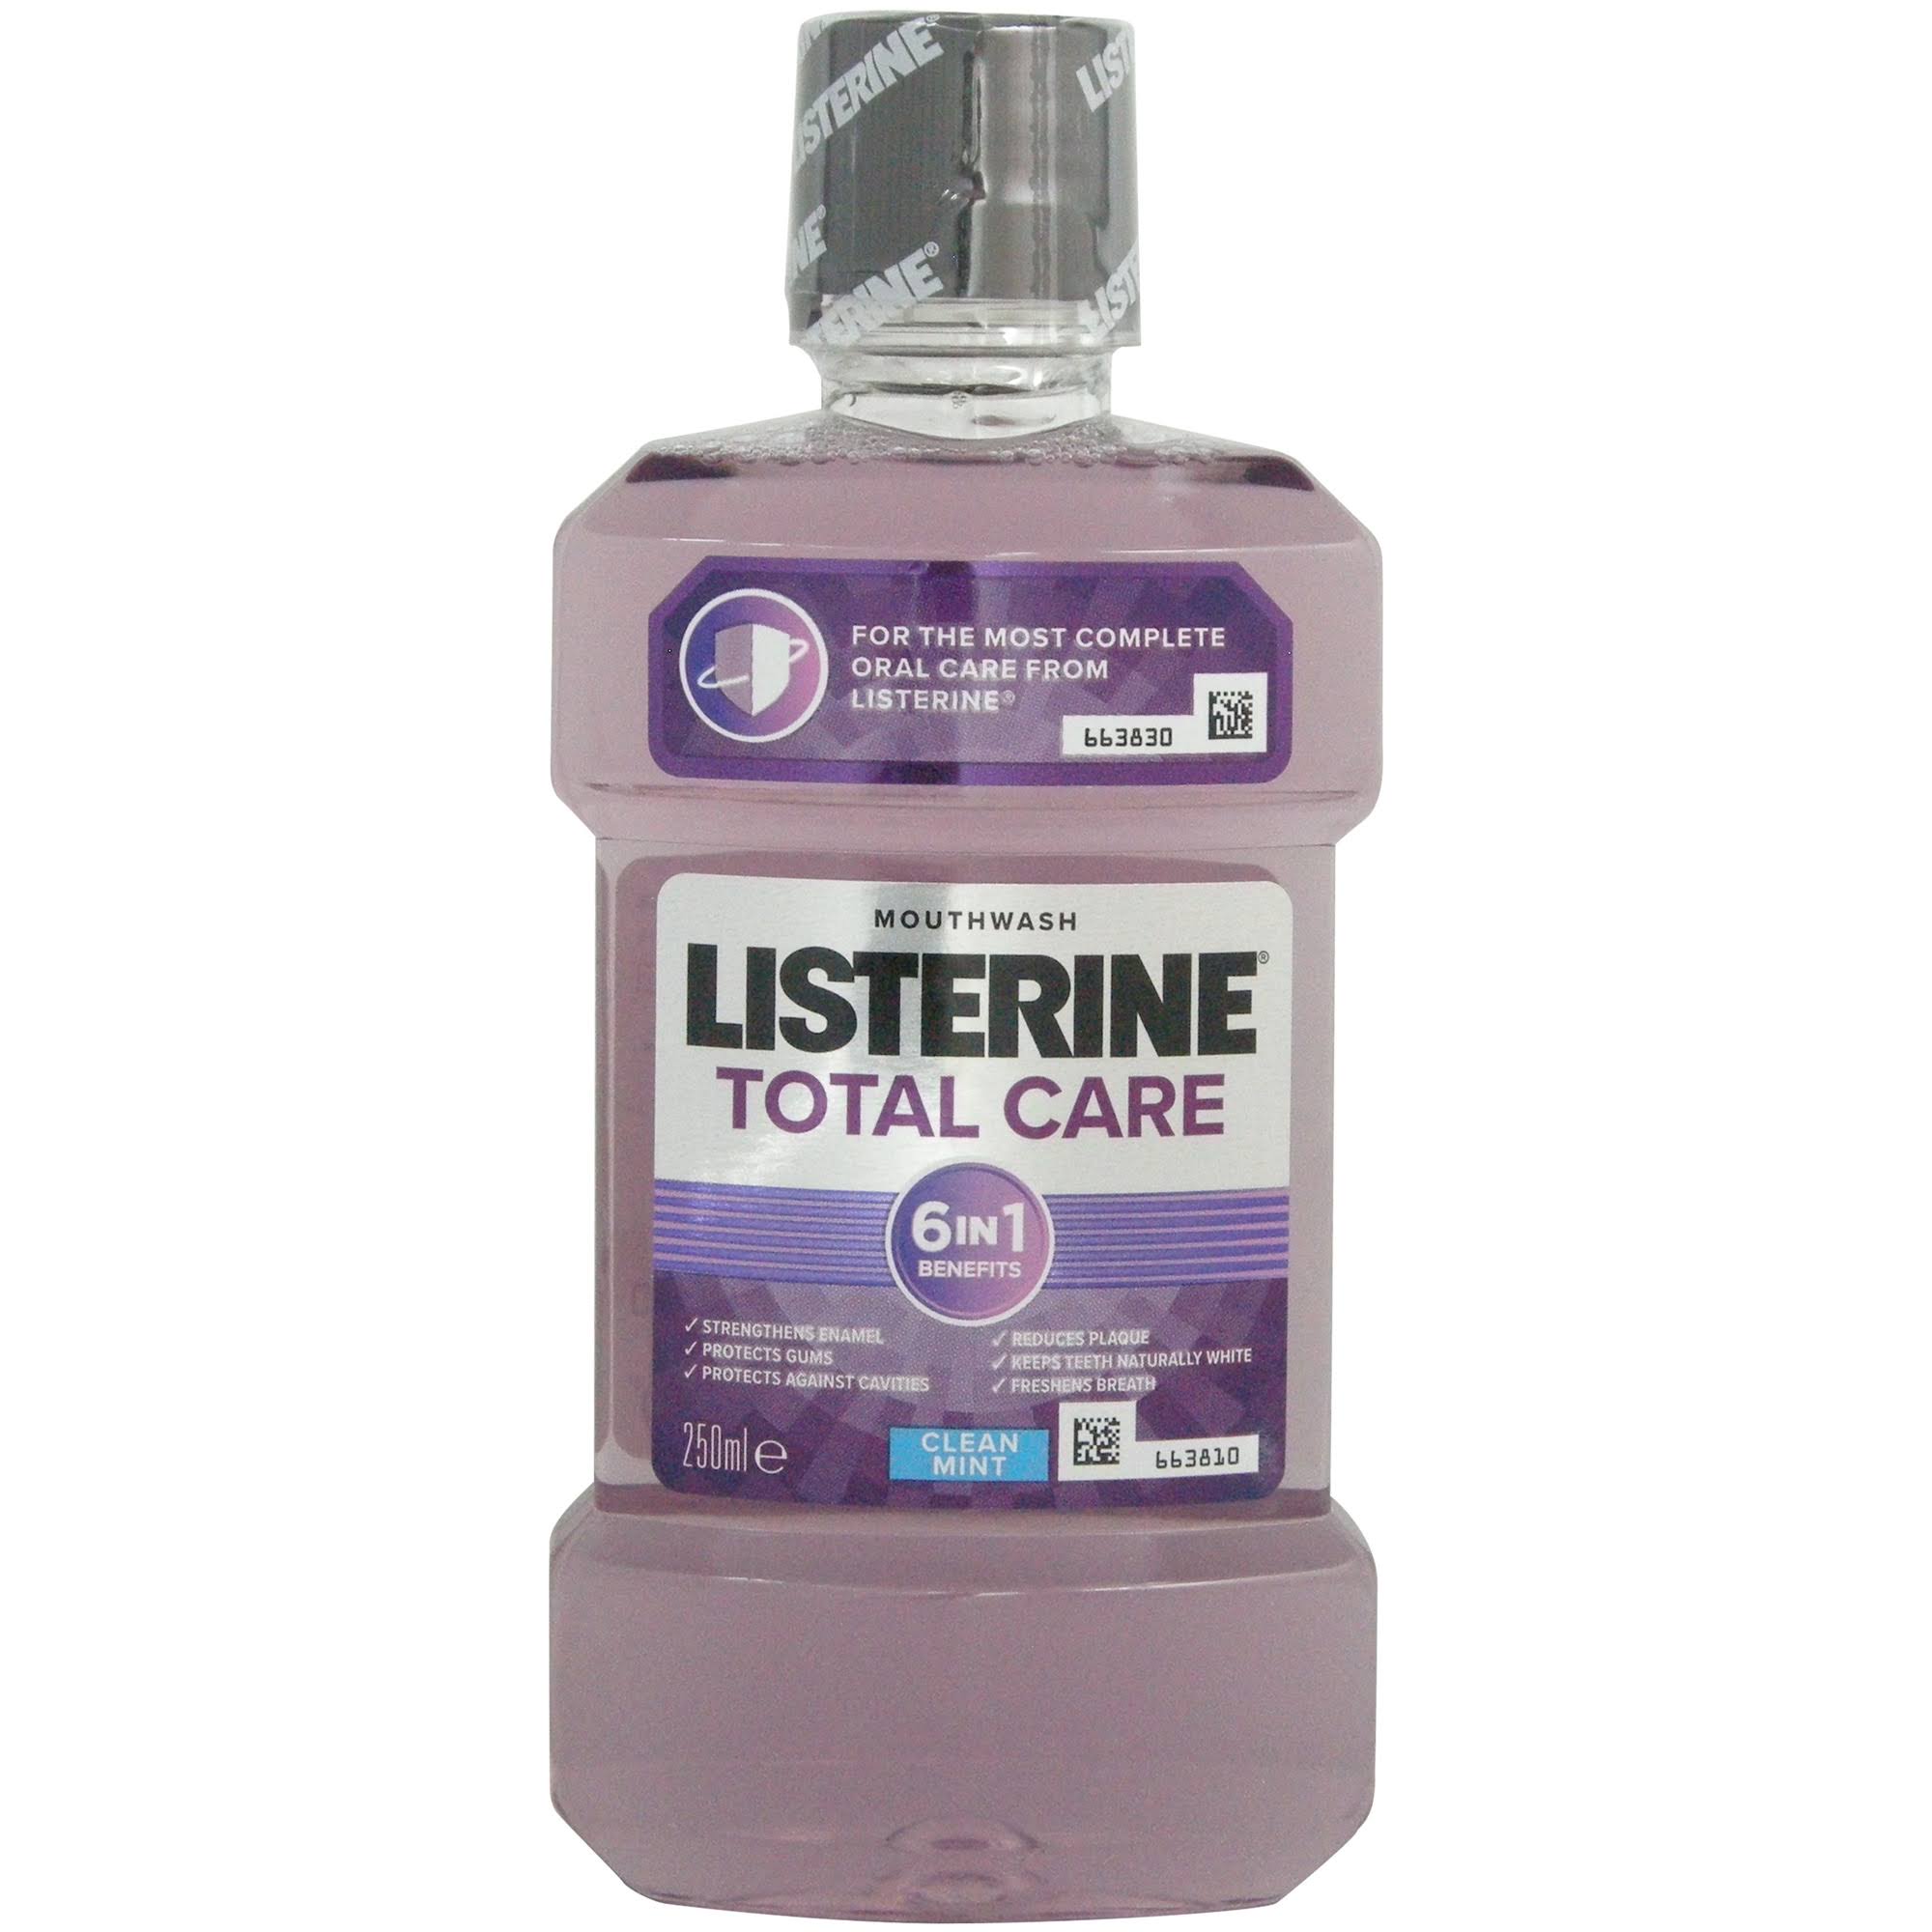 Listerine Total Care Mouthwash - Clean Mint, 250ml